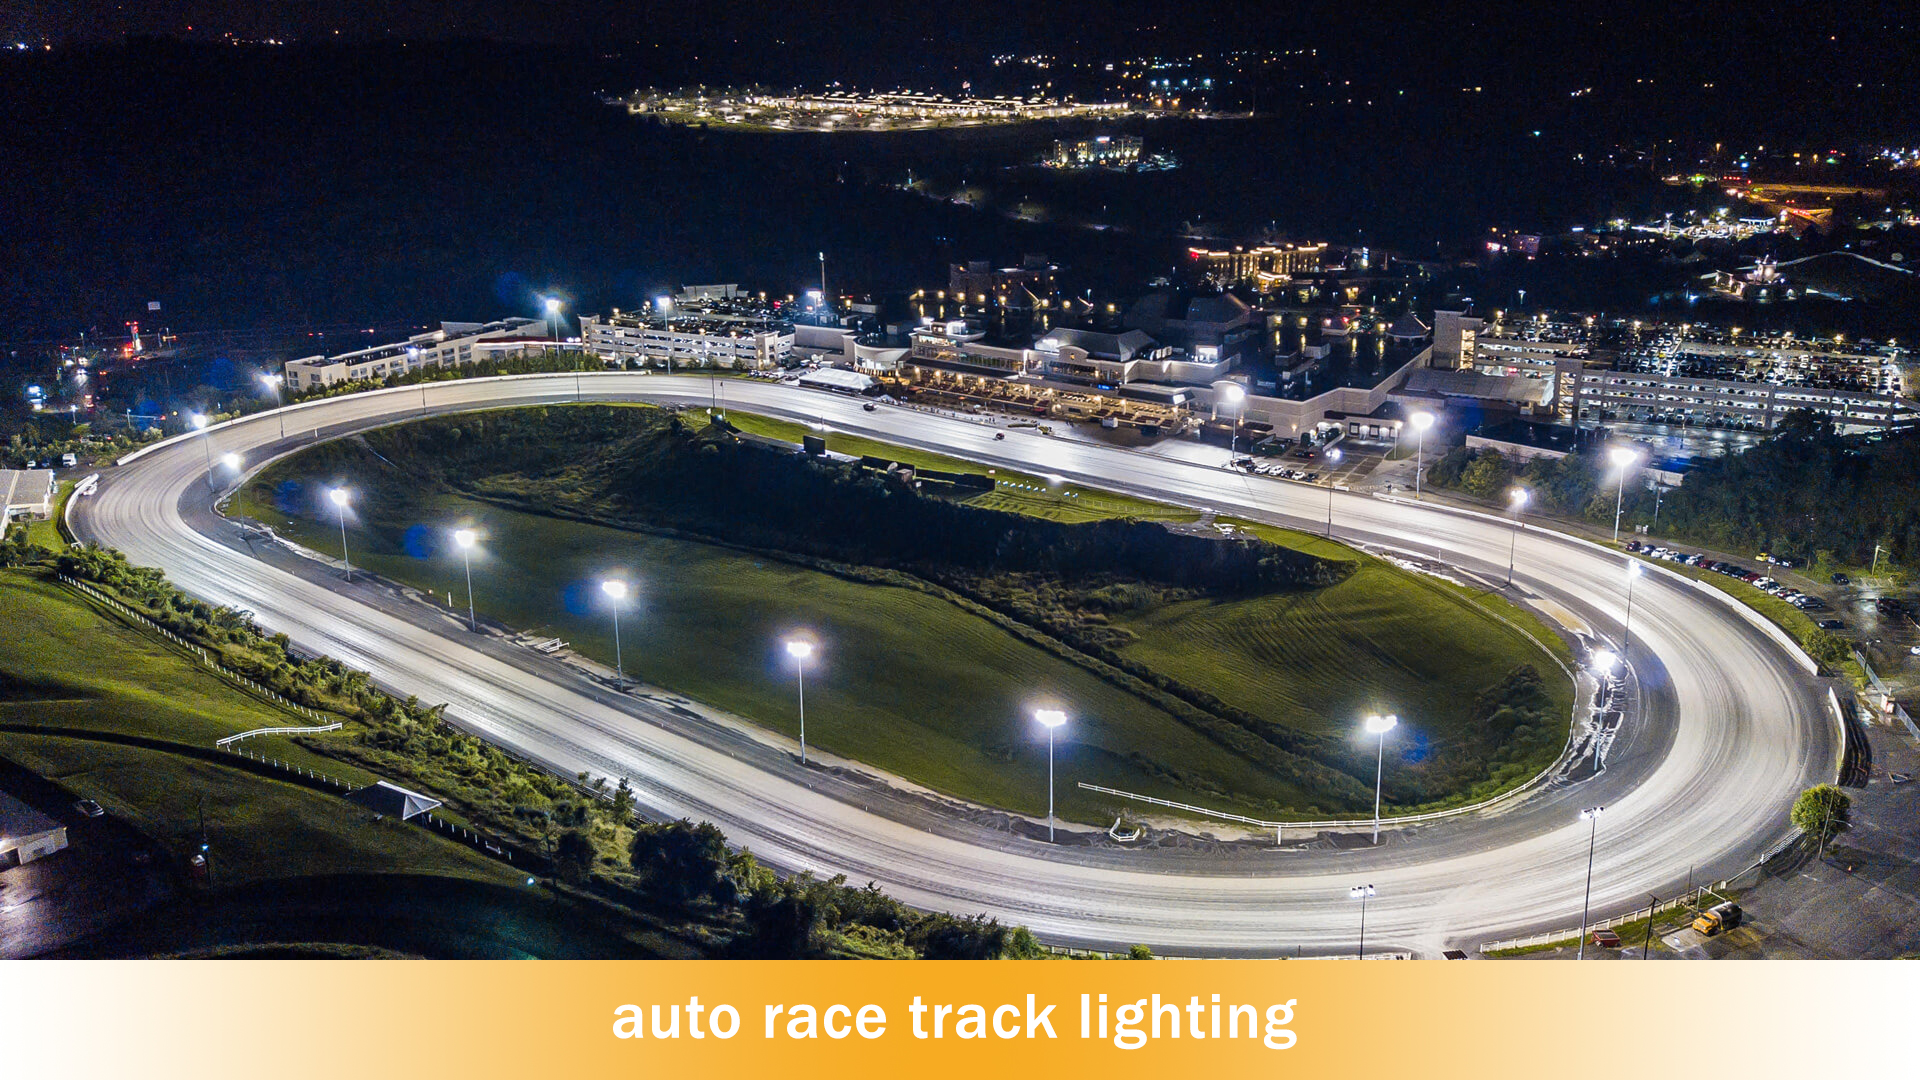 auto race track lighting